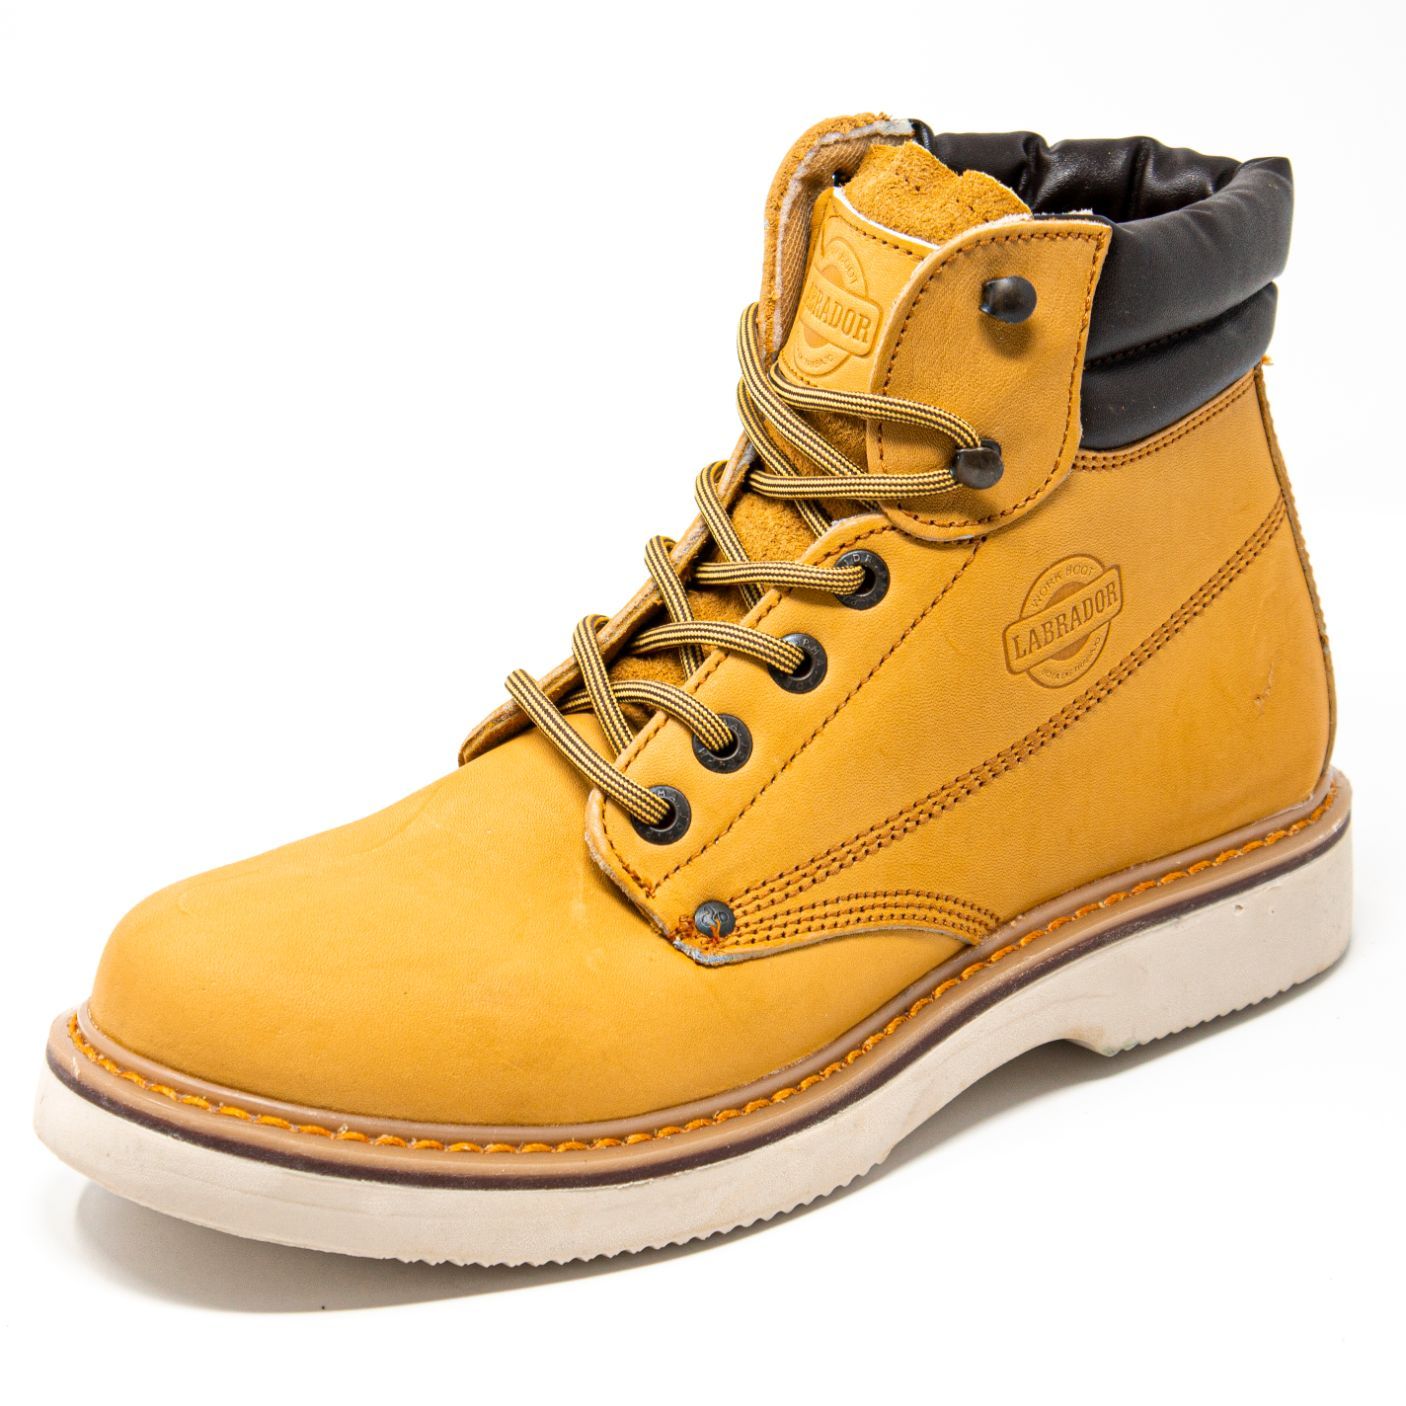 Men's Work Boots - Wedge Sole & Lightweight - Tan Work Boots - Labrador - 6" Work Boots - Honey 6in Work Boots